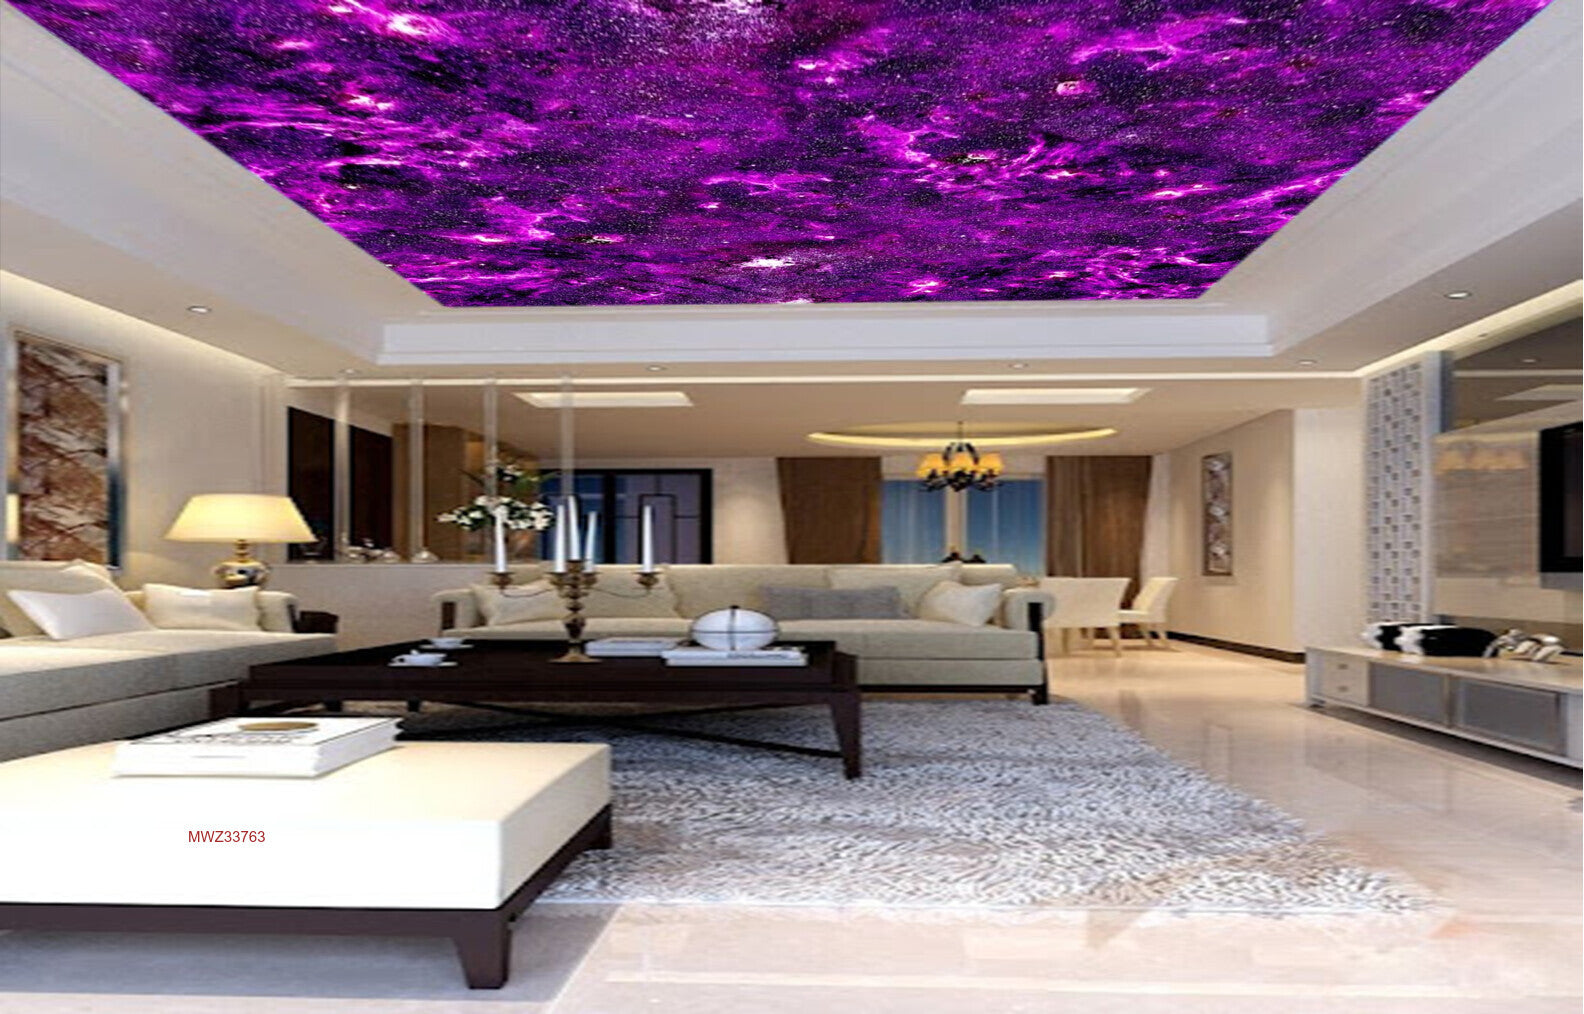 Avikalp MWZ3376 Pink Space Stars HD Wallpaper for Ceiling